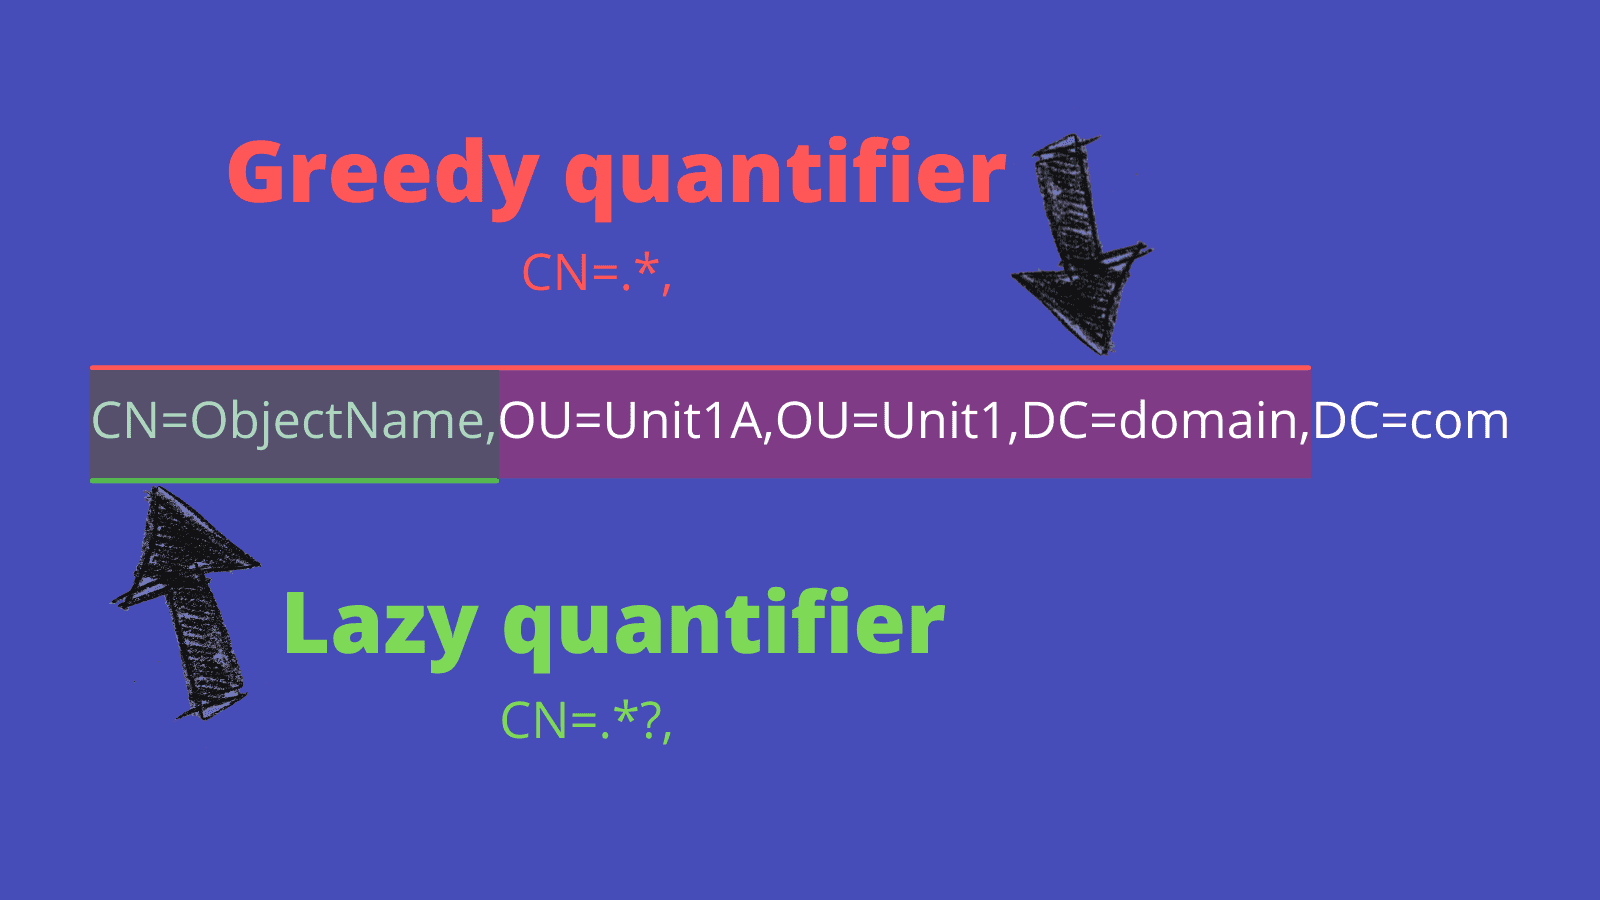 Greedy and lazy quantifier comparison